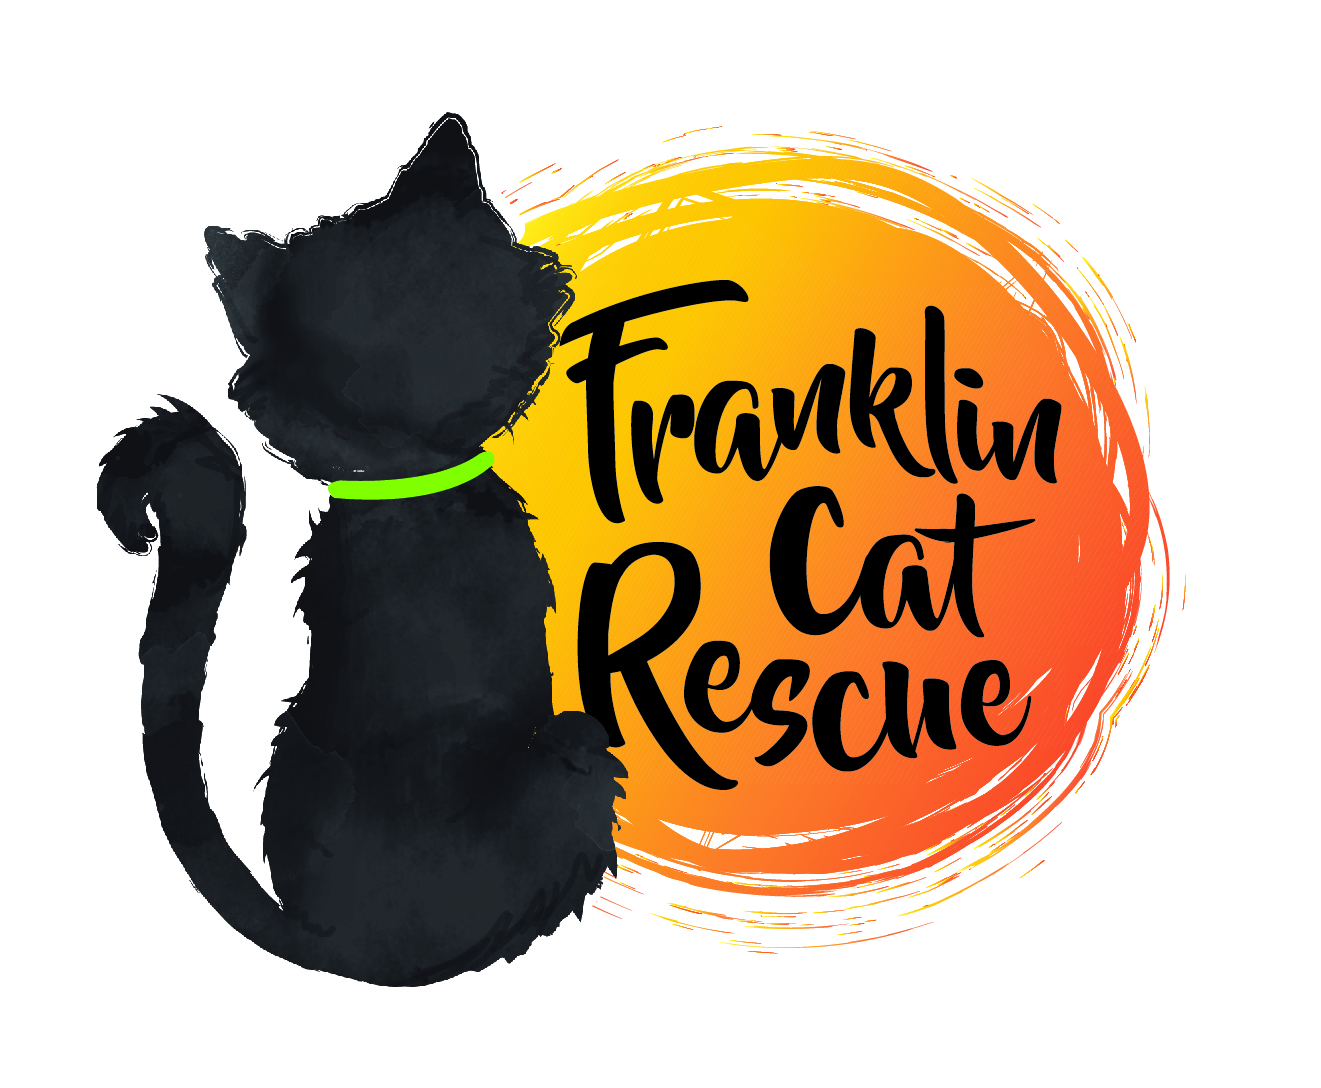 Franklin Cat Rescue